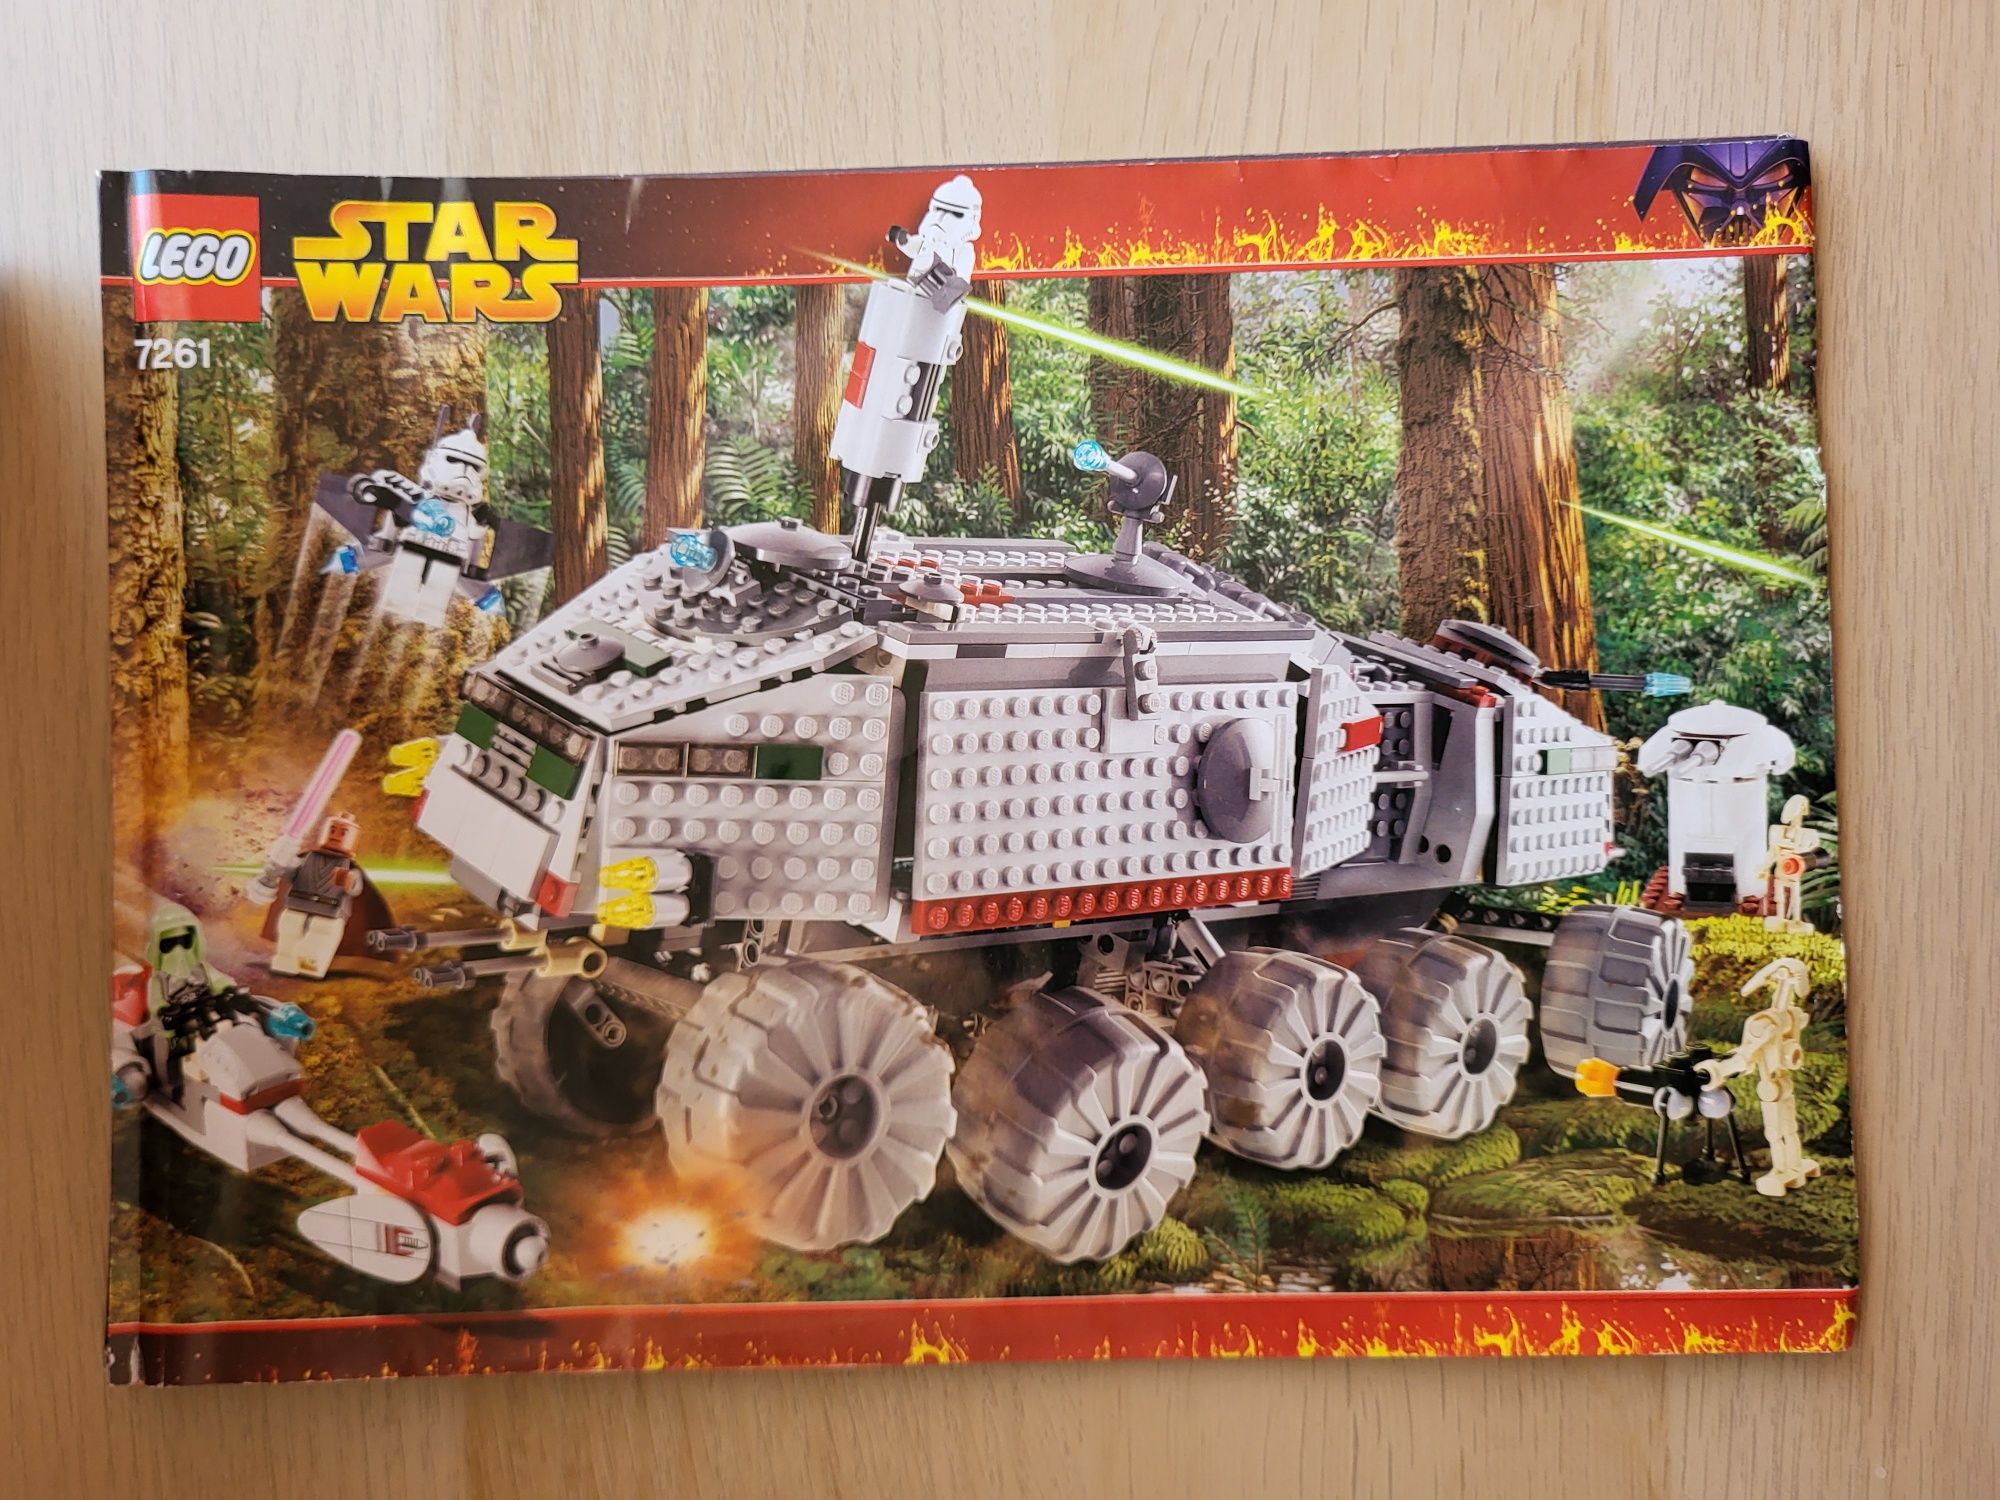 Lego star wars 7261 Clone Turbo Tank with light-up Mace Windu